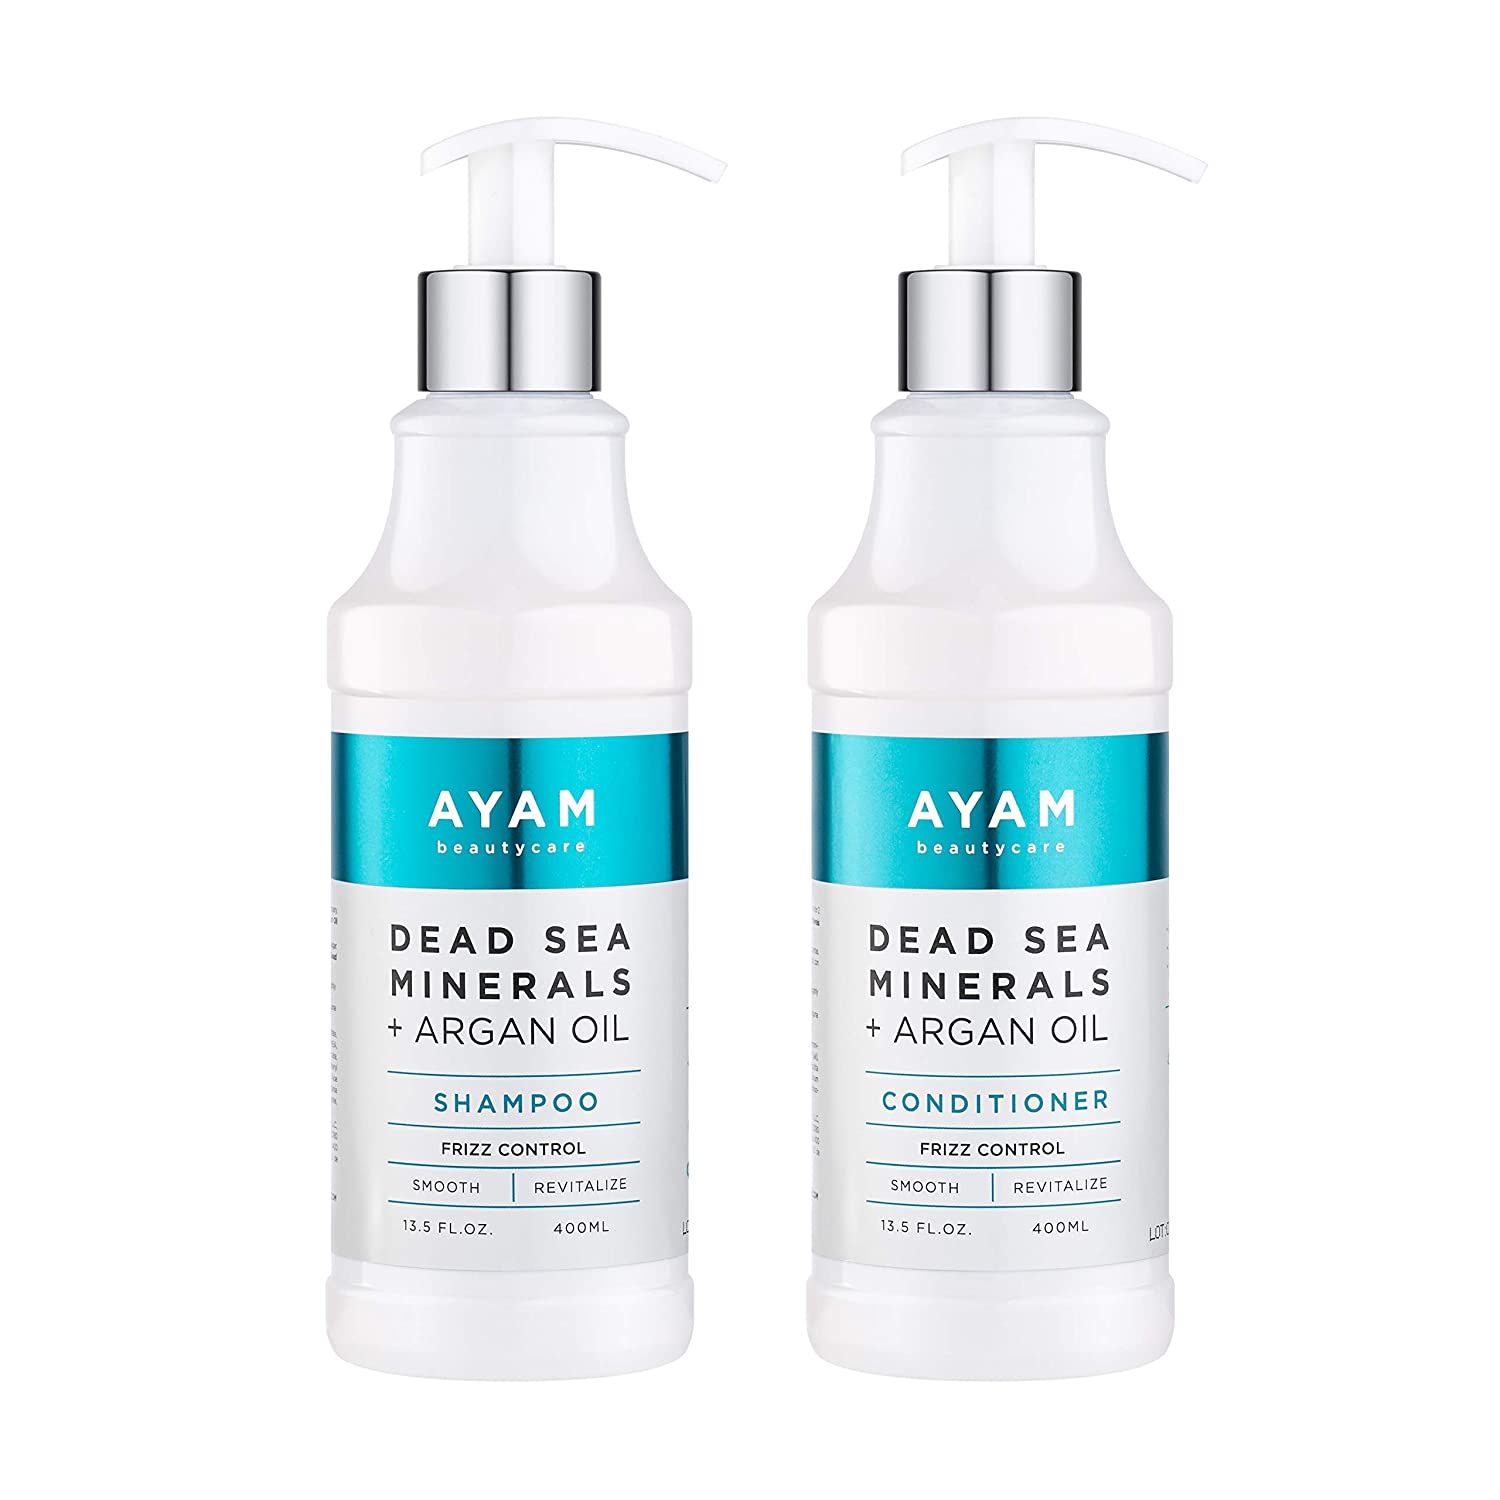 AYAM Beautycare Dead Sea Minerals + Argan Oil ShampooAYAM Beautycare Dead Sea Minerals + Argan Oil Shampoo